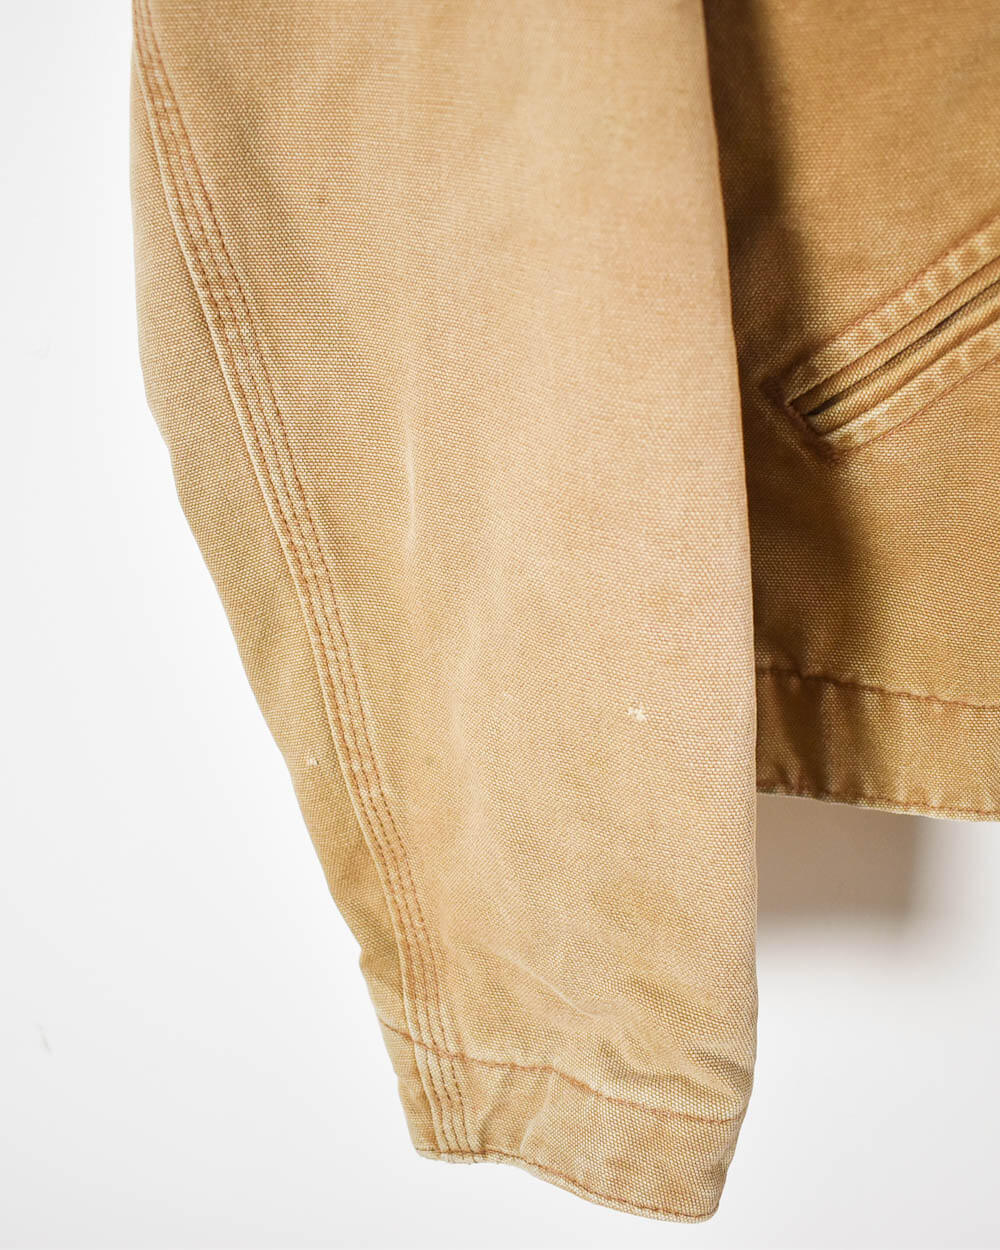 Neutral Carhartt Fleece Lined Workwear Jacket - X-Small